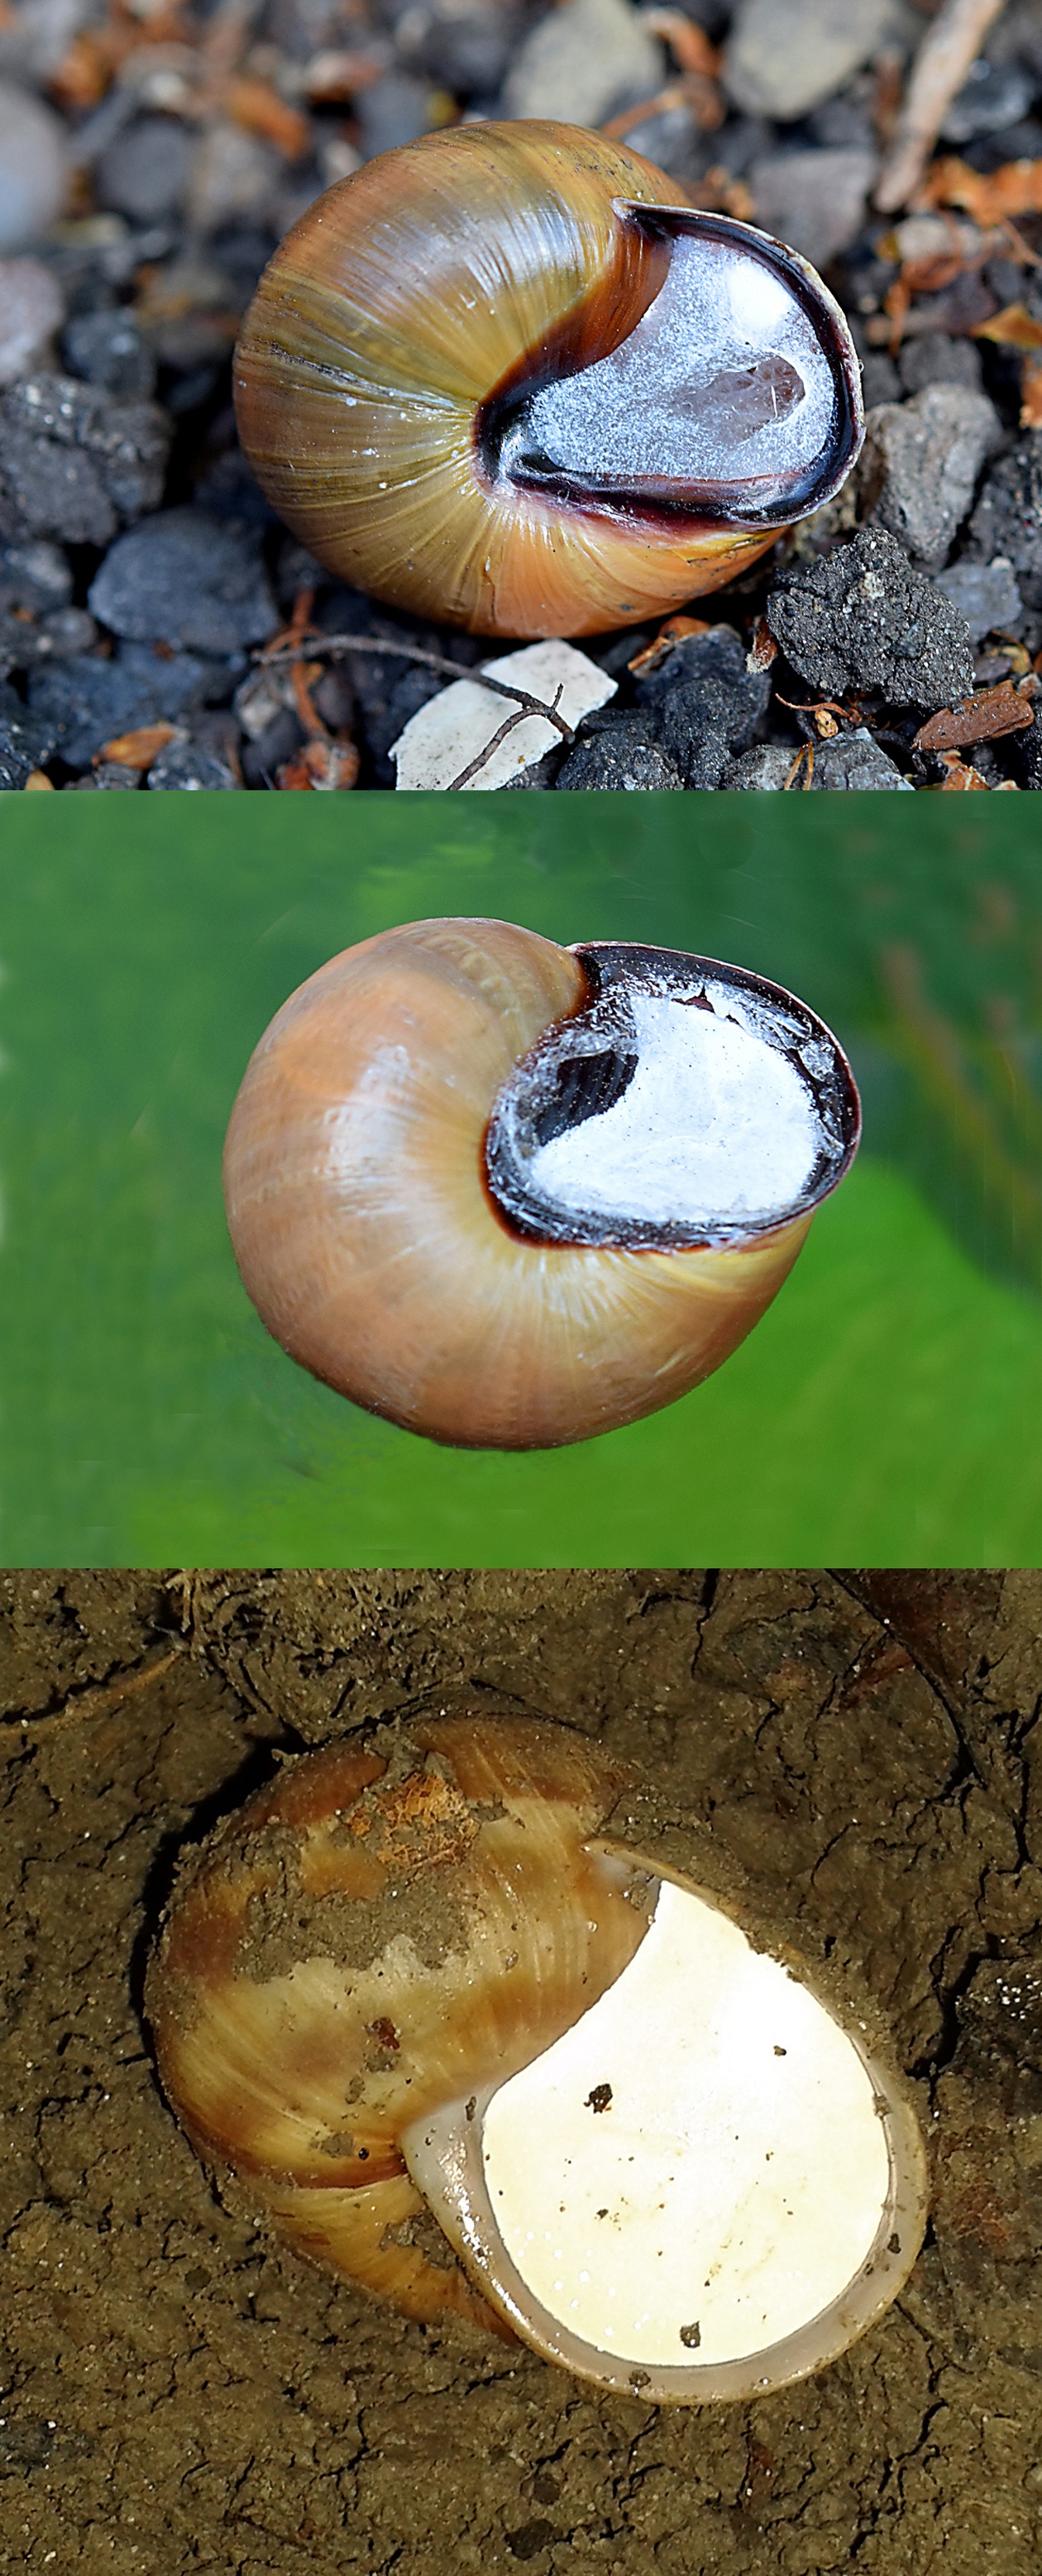 Do snails hibernate in the Cold?